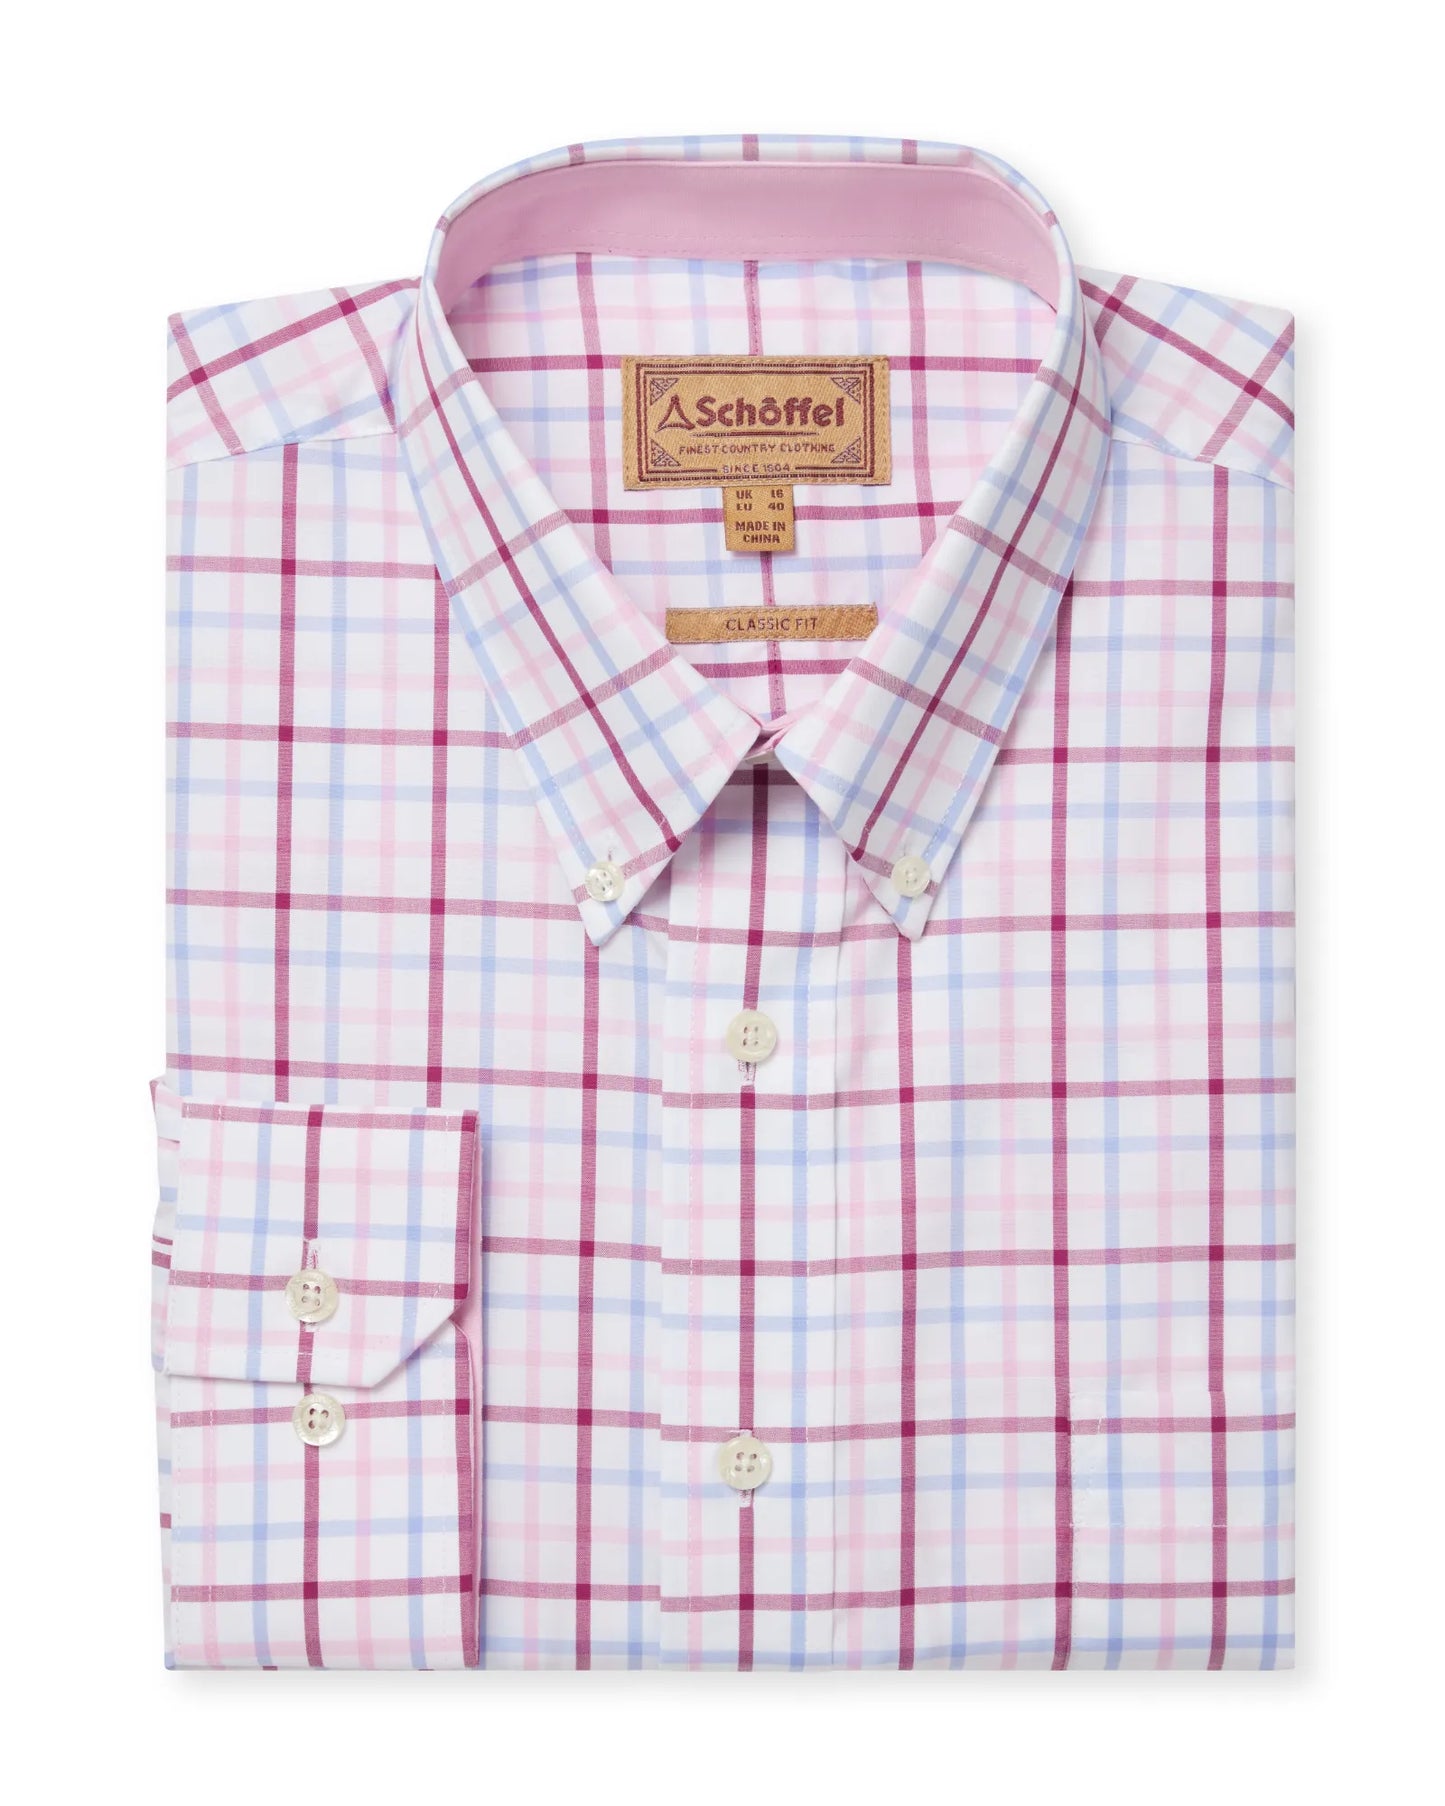 Holkham Classic Shirt - Pink/Blue/Raspberry Check